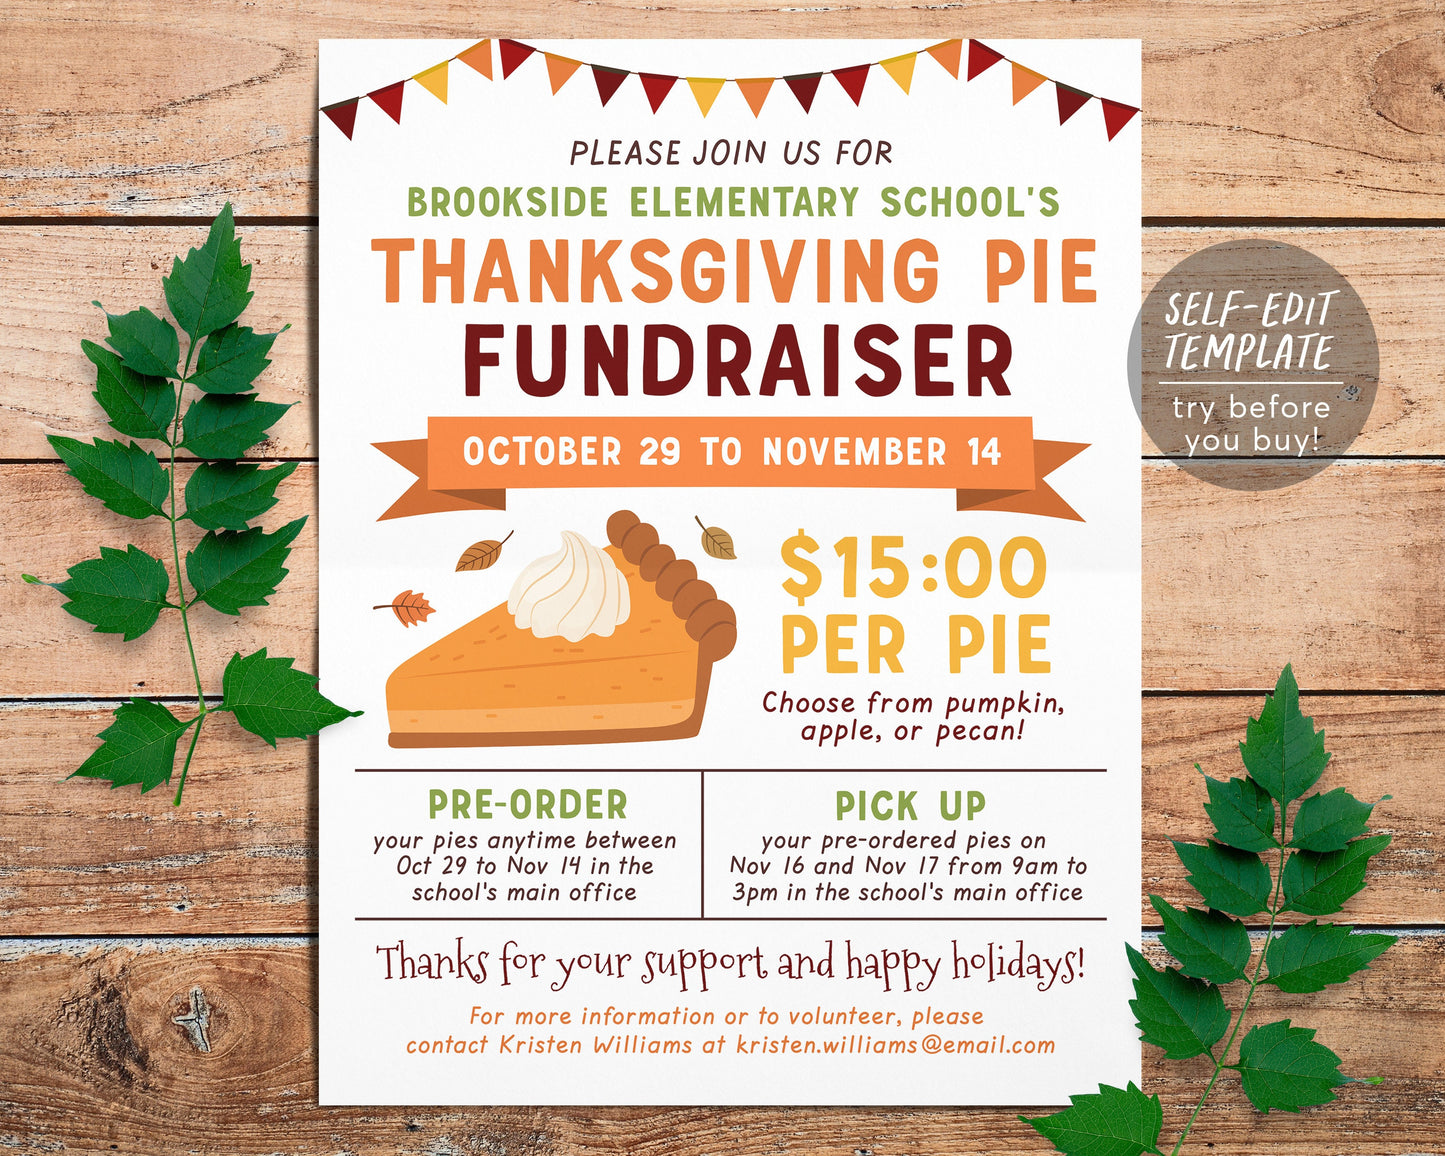 Thanksgiving Pie Fundraiser Flyer Editable Template, Fall Pumpkin Pie Invitation Bake Sale, School PTO PTA, Church Community Pie Drive